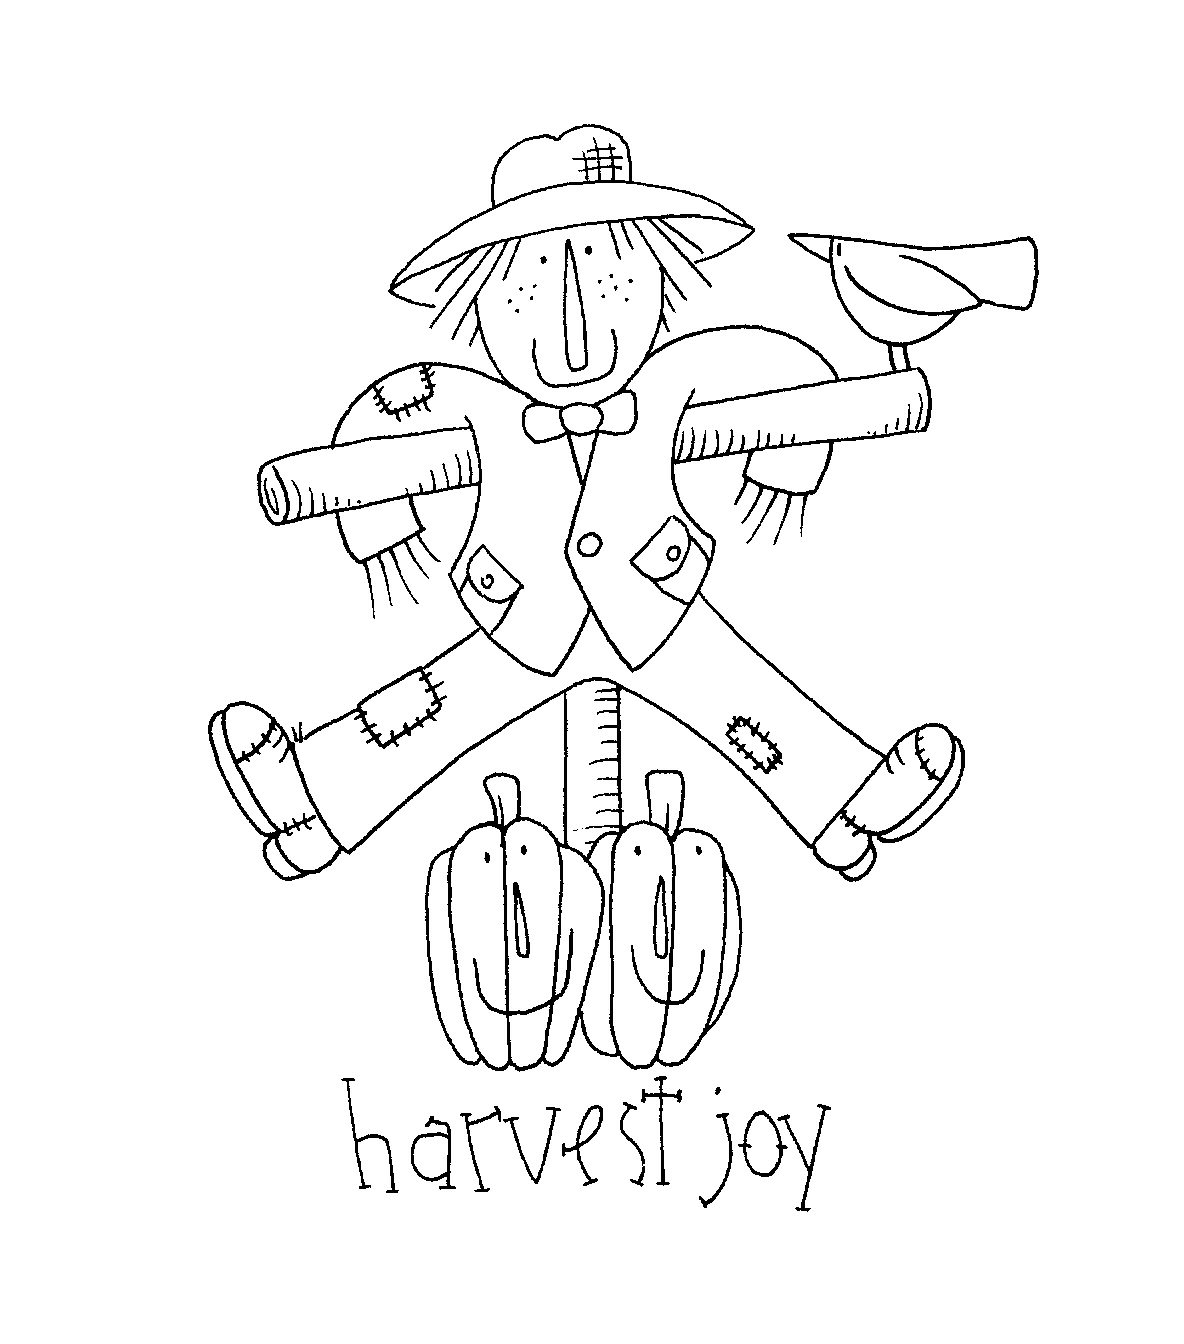 [ScarecrowHarvestJoy.jpg]